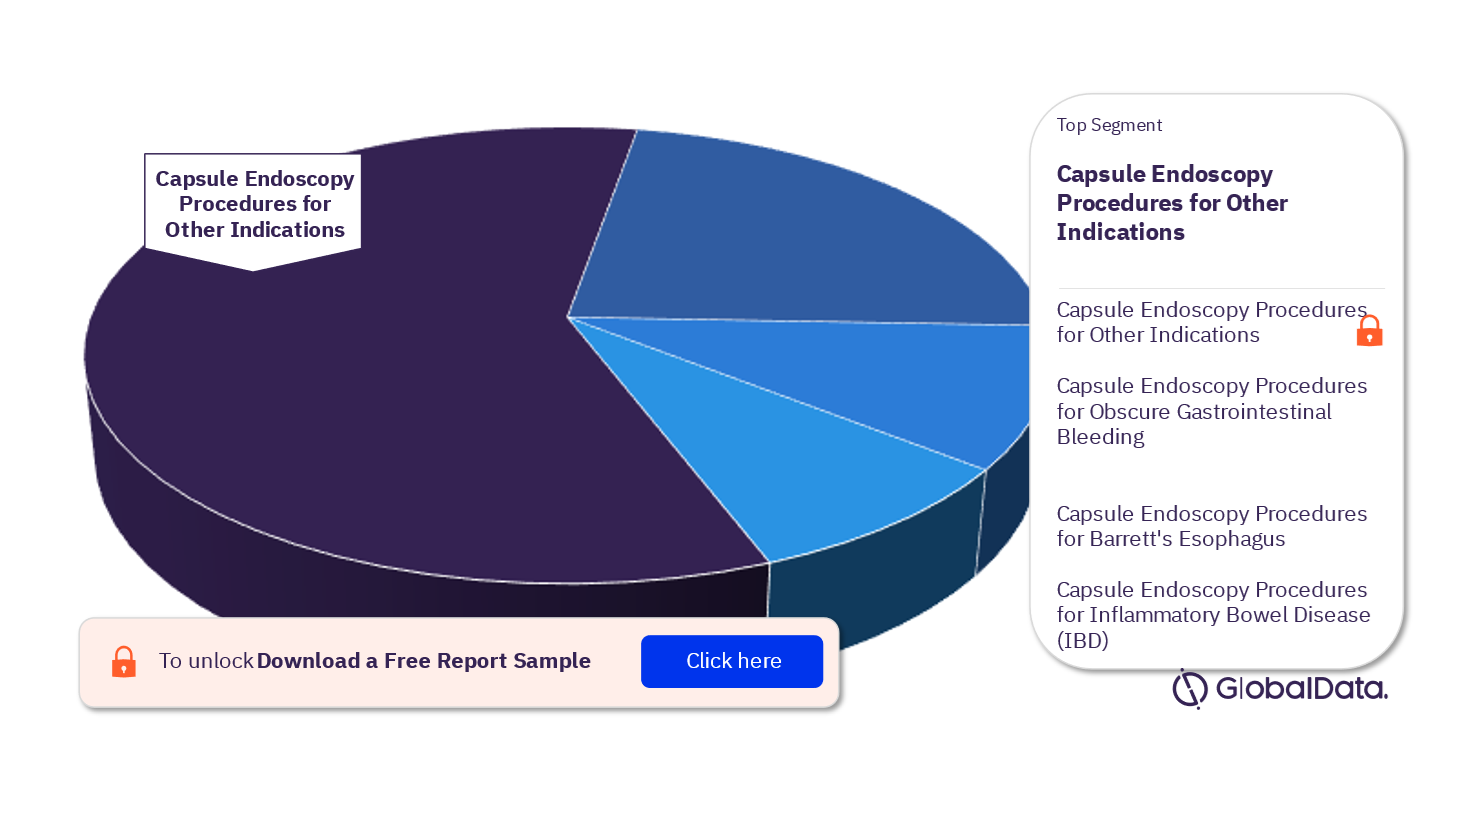 UK Capsule Endoscopy Procedures Market Analysis by Segments, 2022 (%)